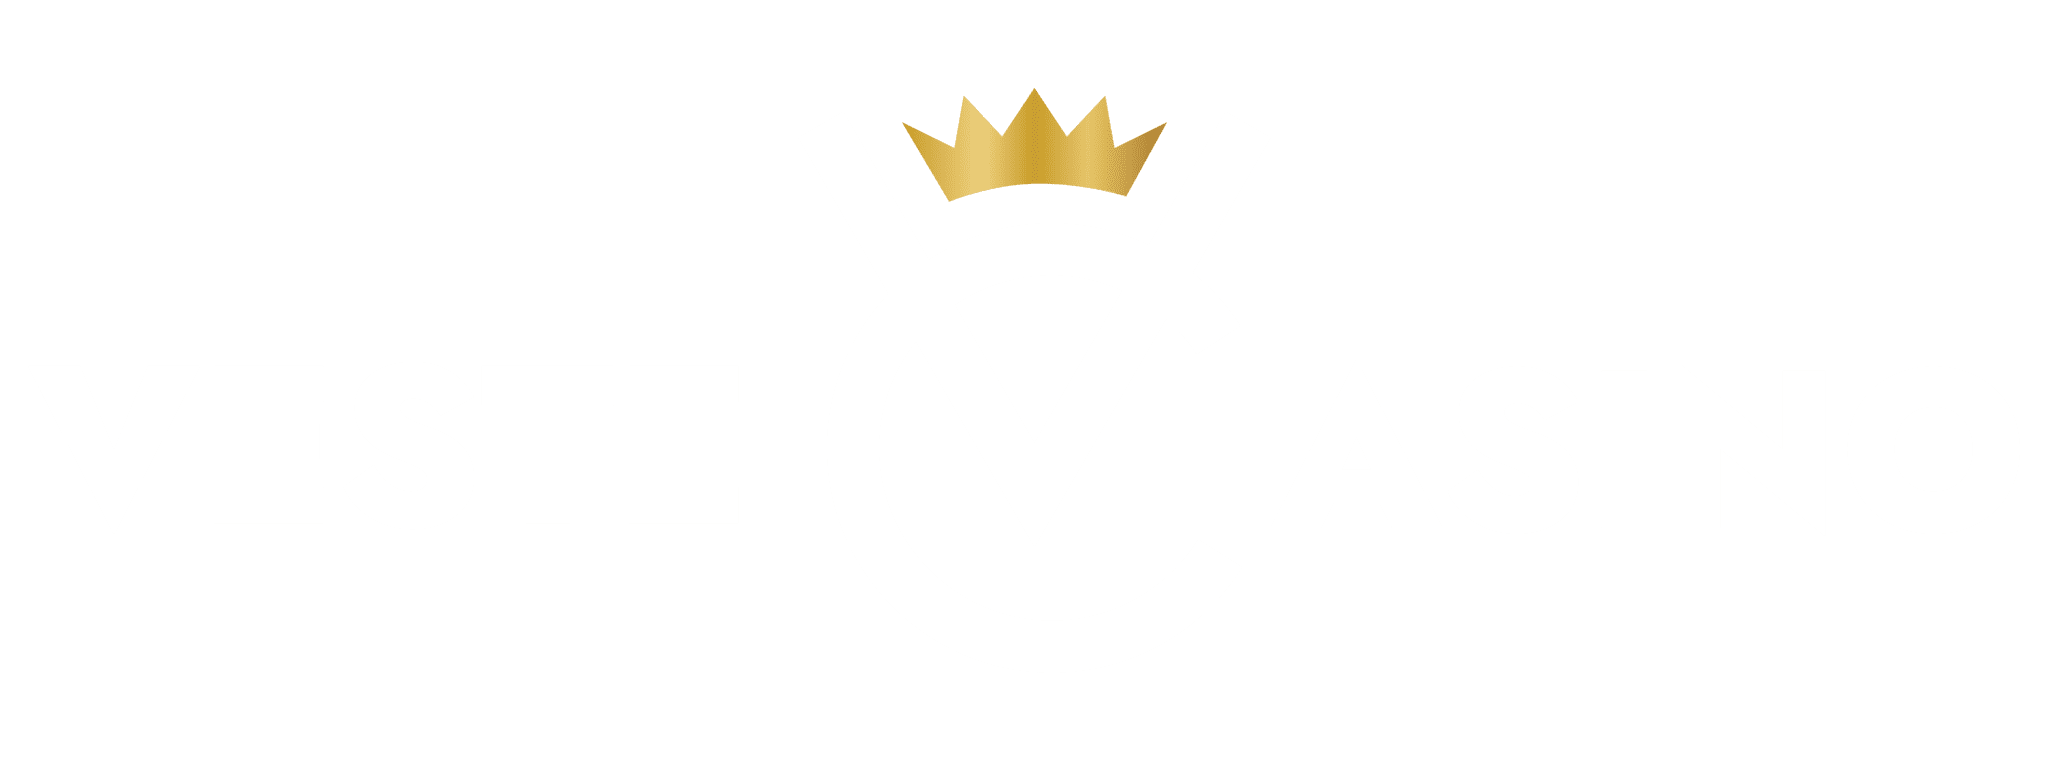 VesteCasino_logo-01